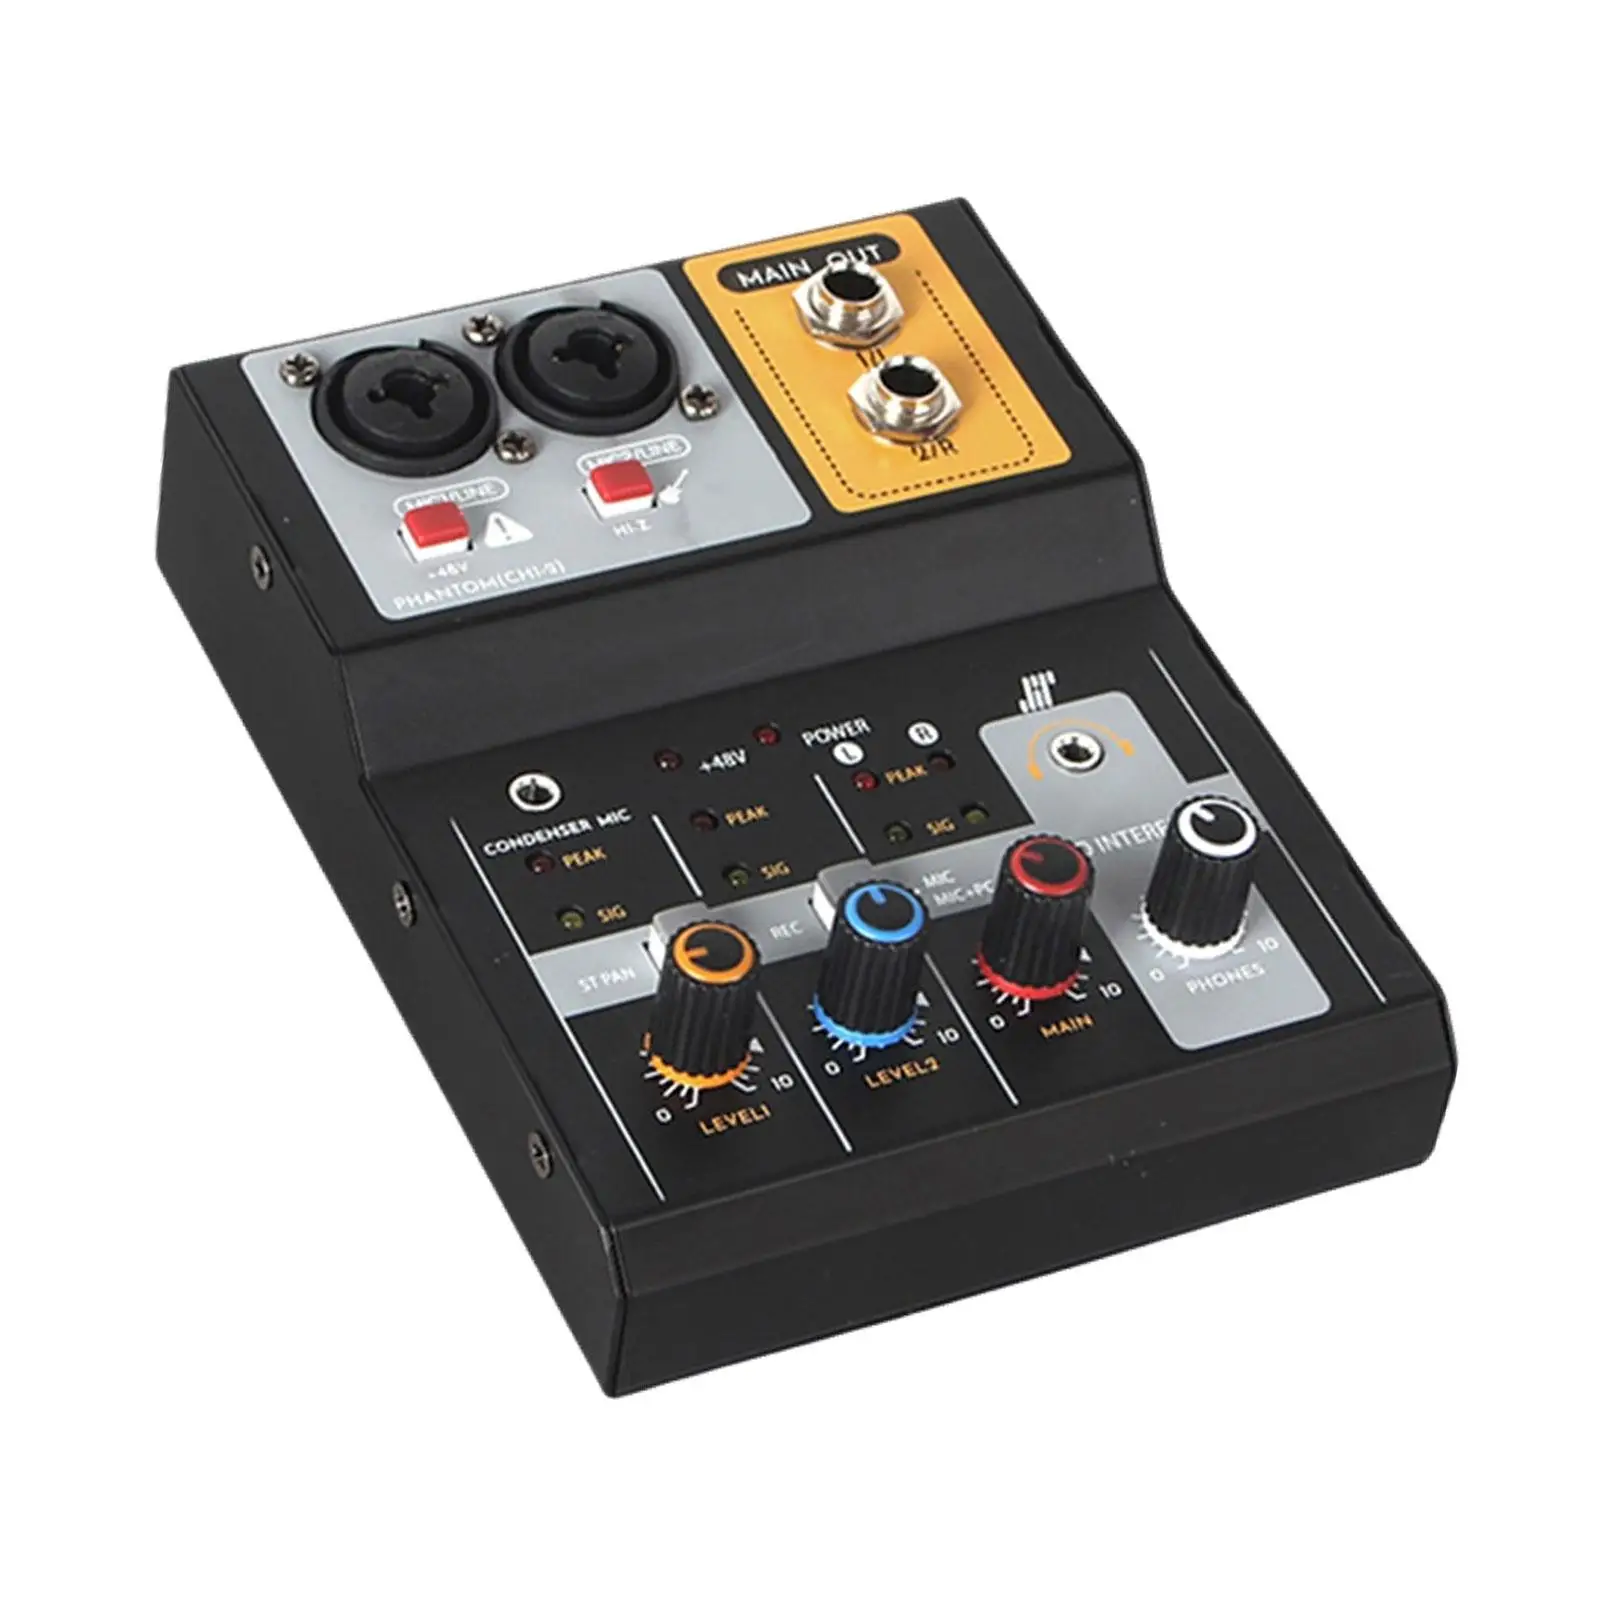 Audio Sound Mixer with Sound Card USB Stereo Professional 48V Digital Mixer for Live KTV Music Recording Podcasting Studio Show